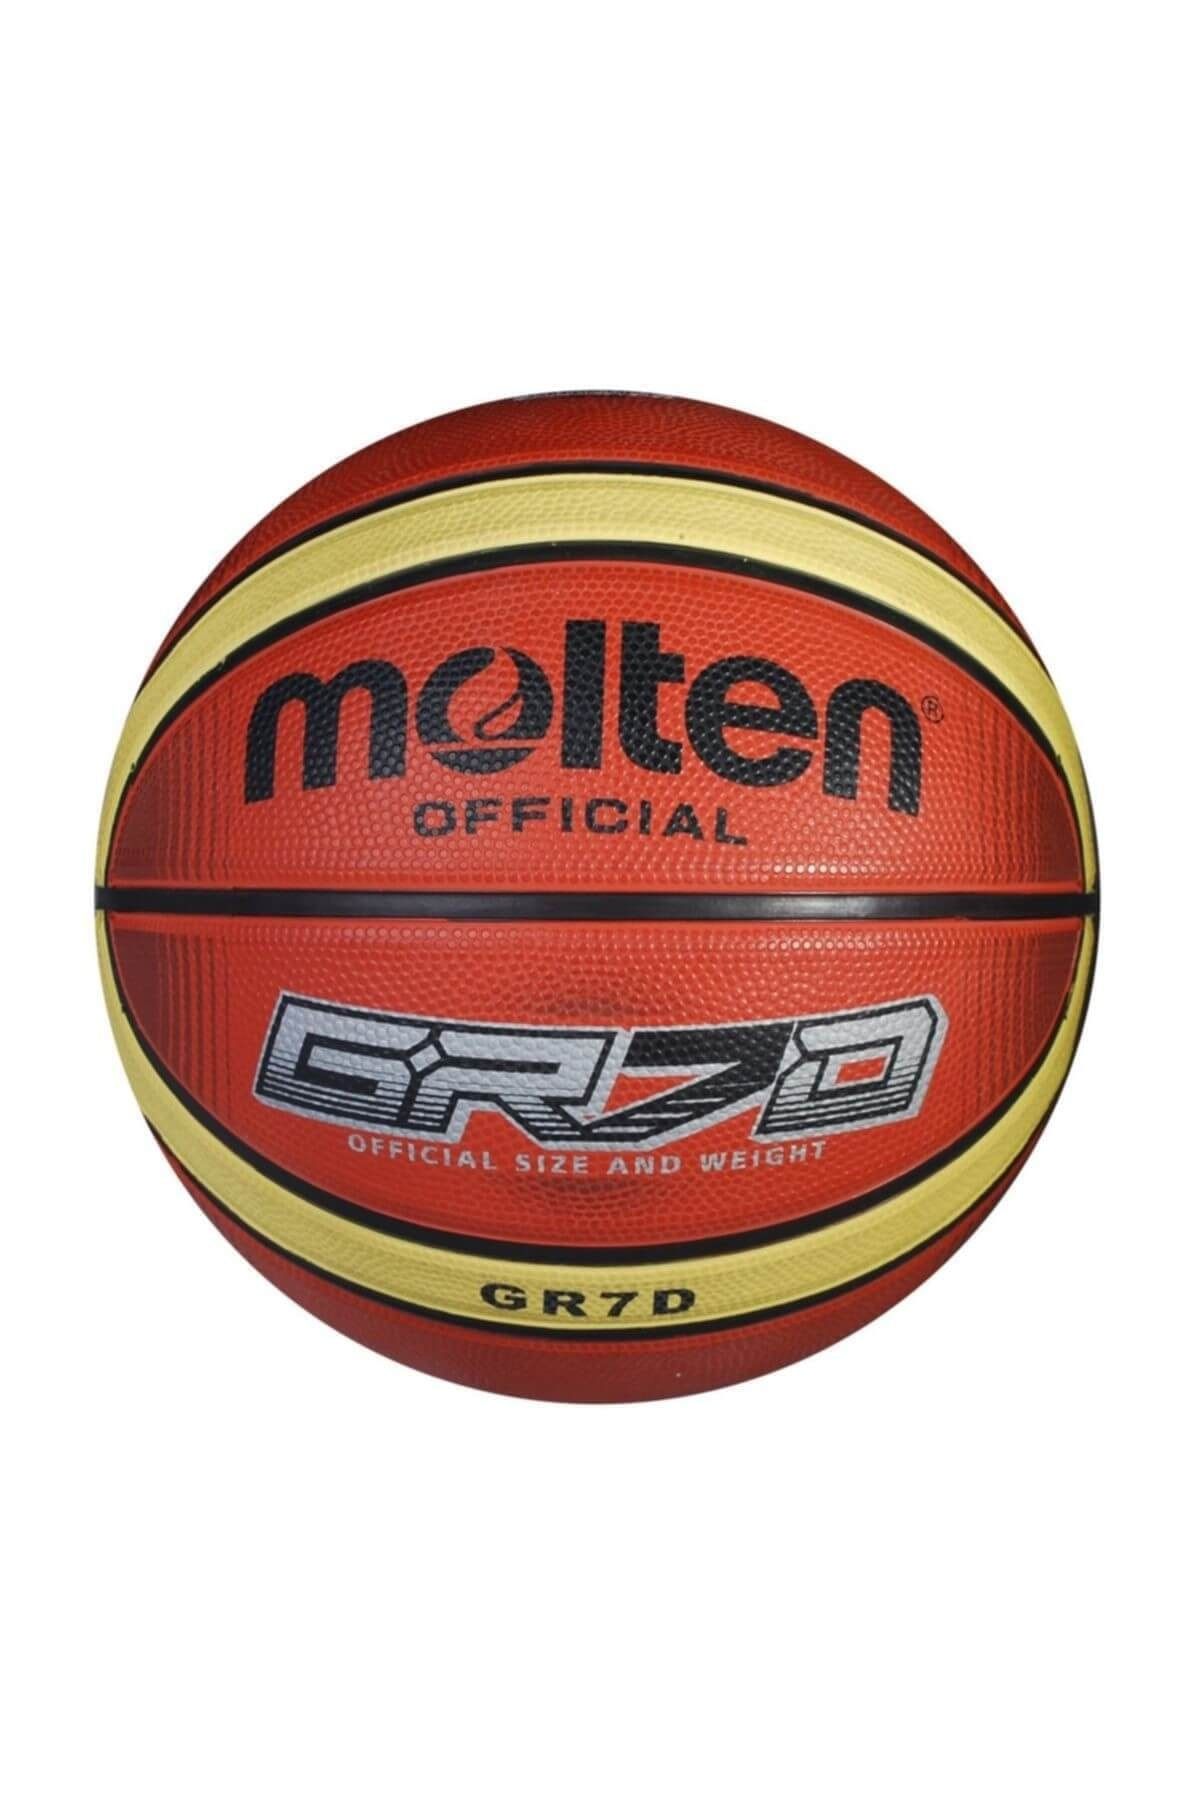 Molten BGRX7D-TI 7 Numara Kauçuk Basketbol Topu